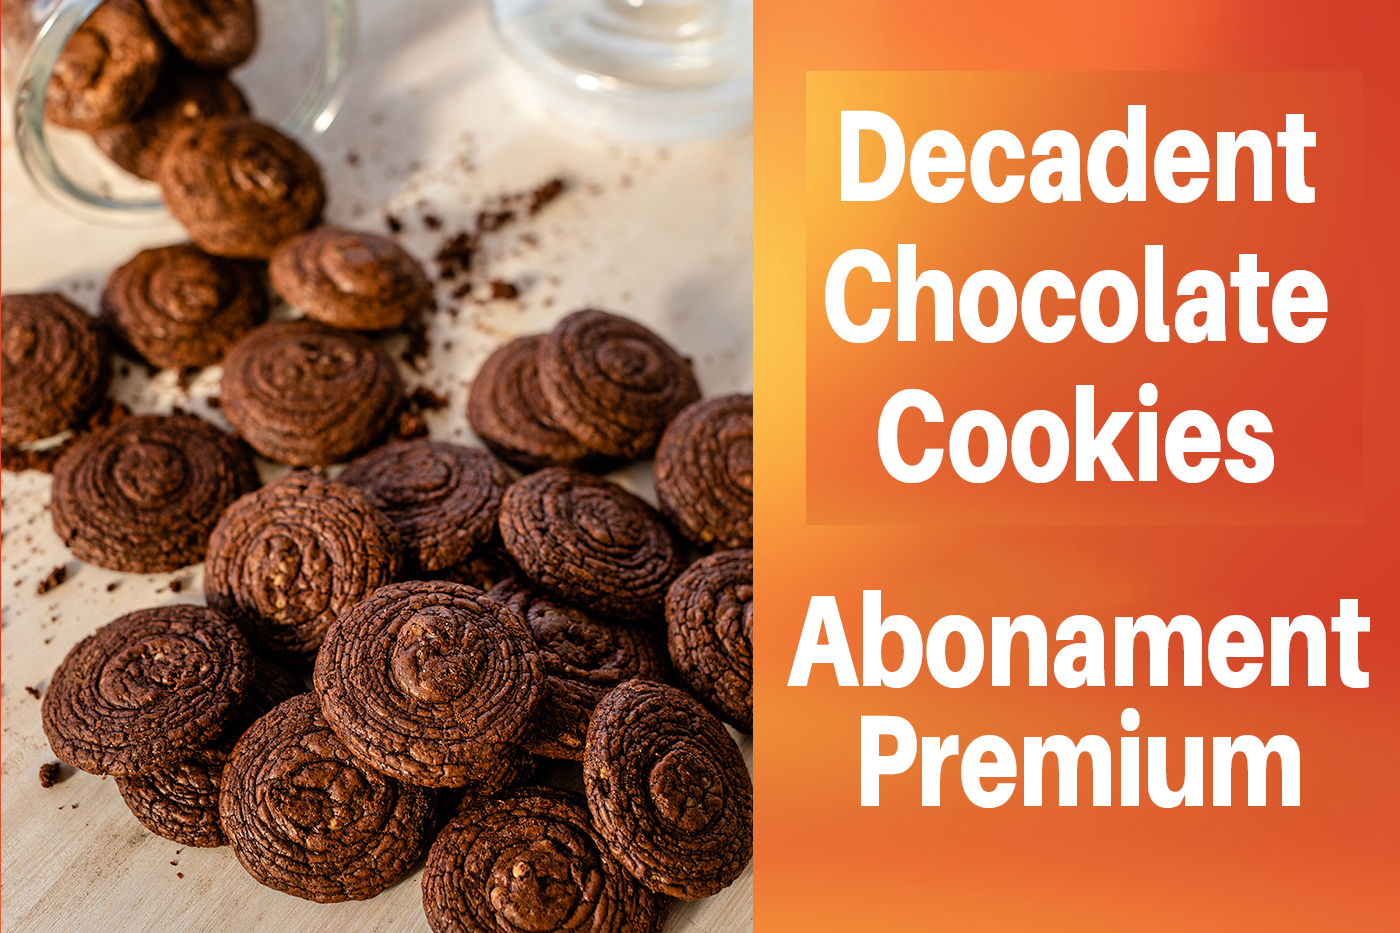 Decadent Chocolate Cookies